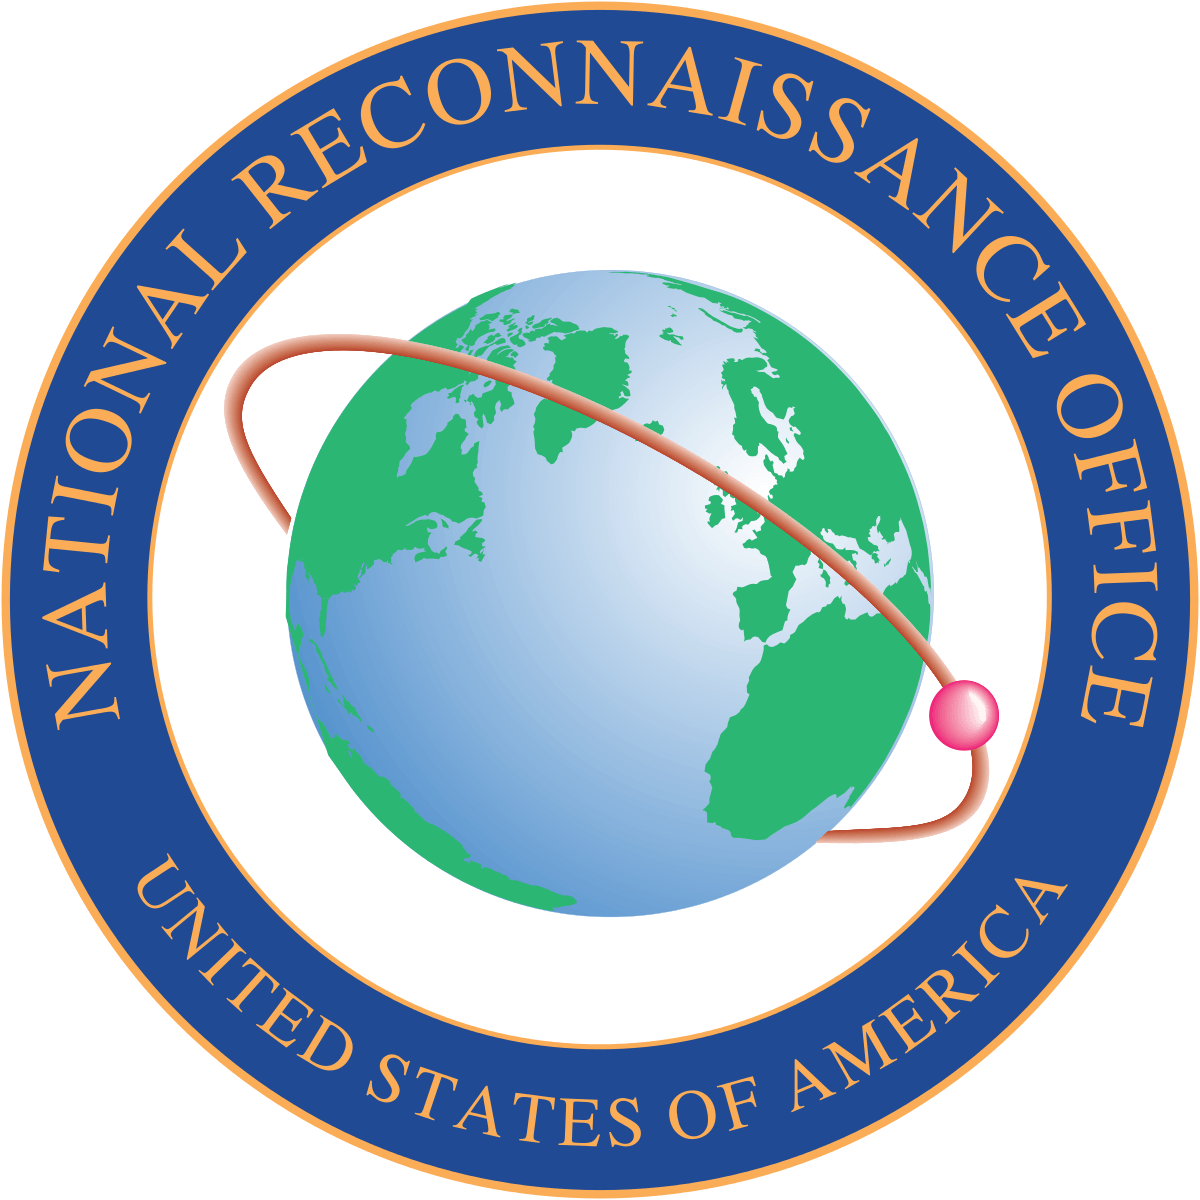 NRO Logo - National Reconnaissance Office